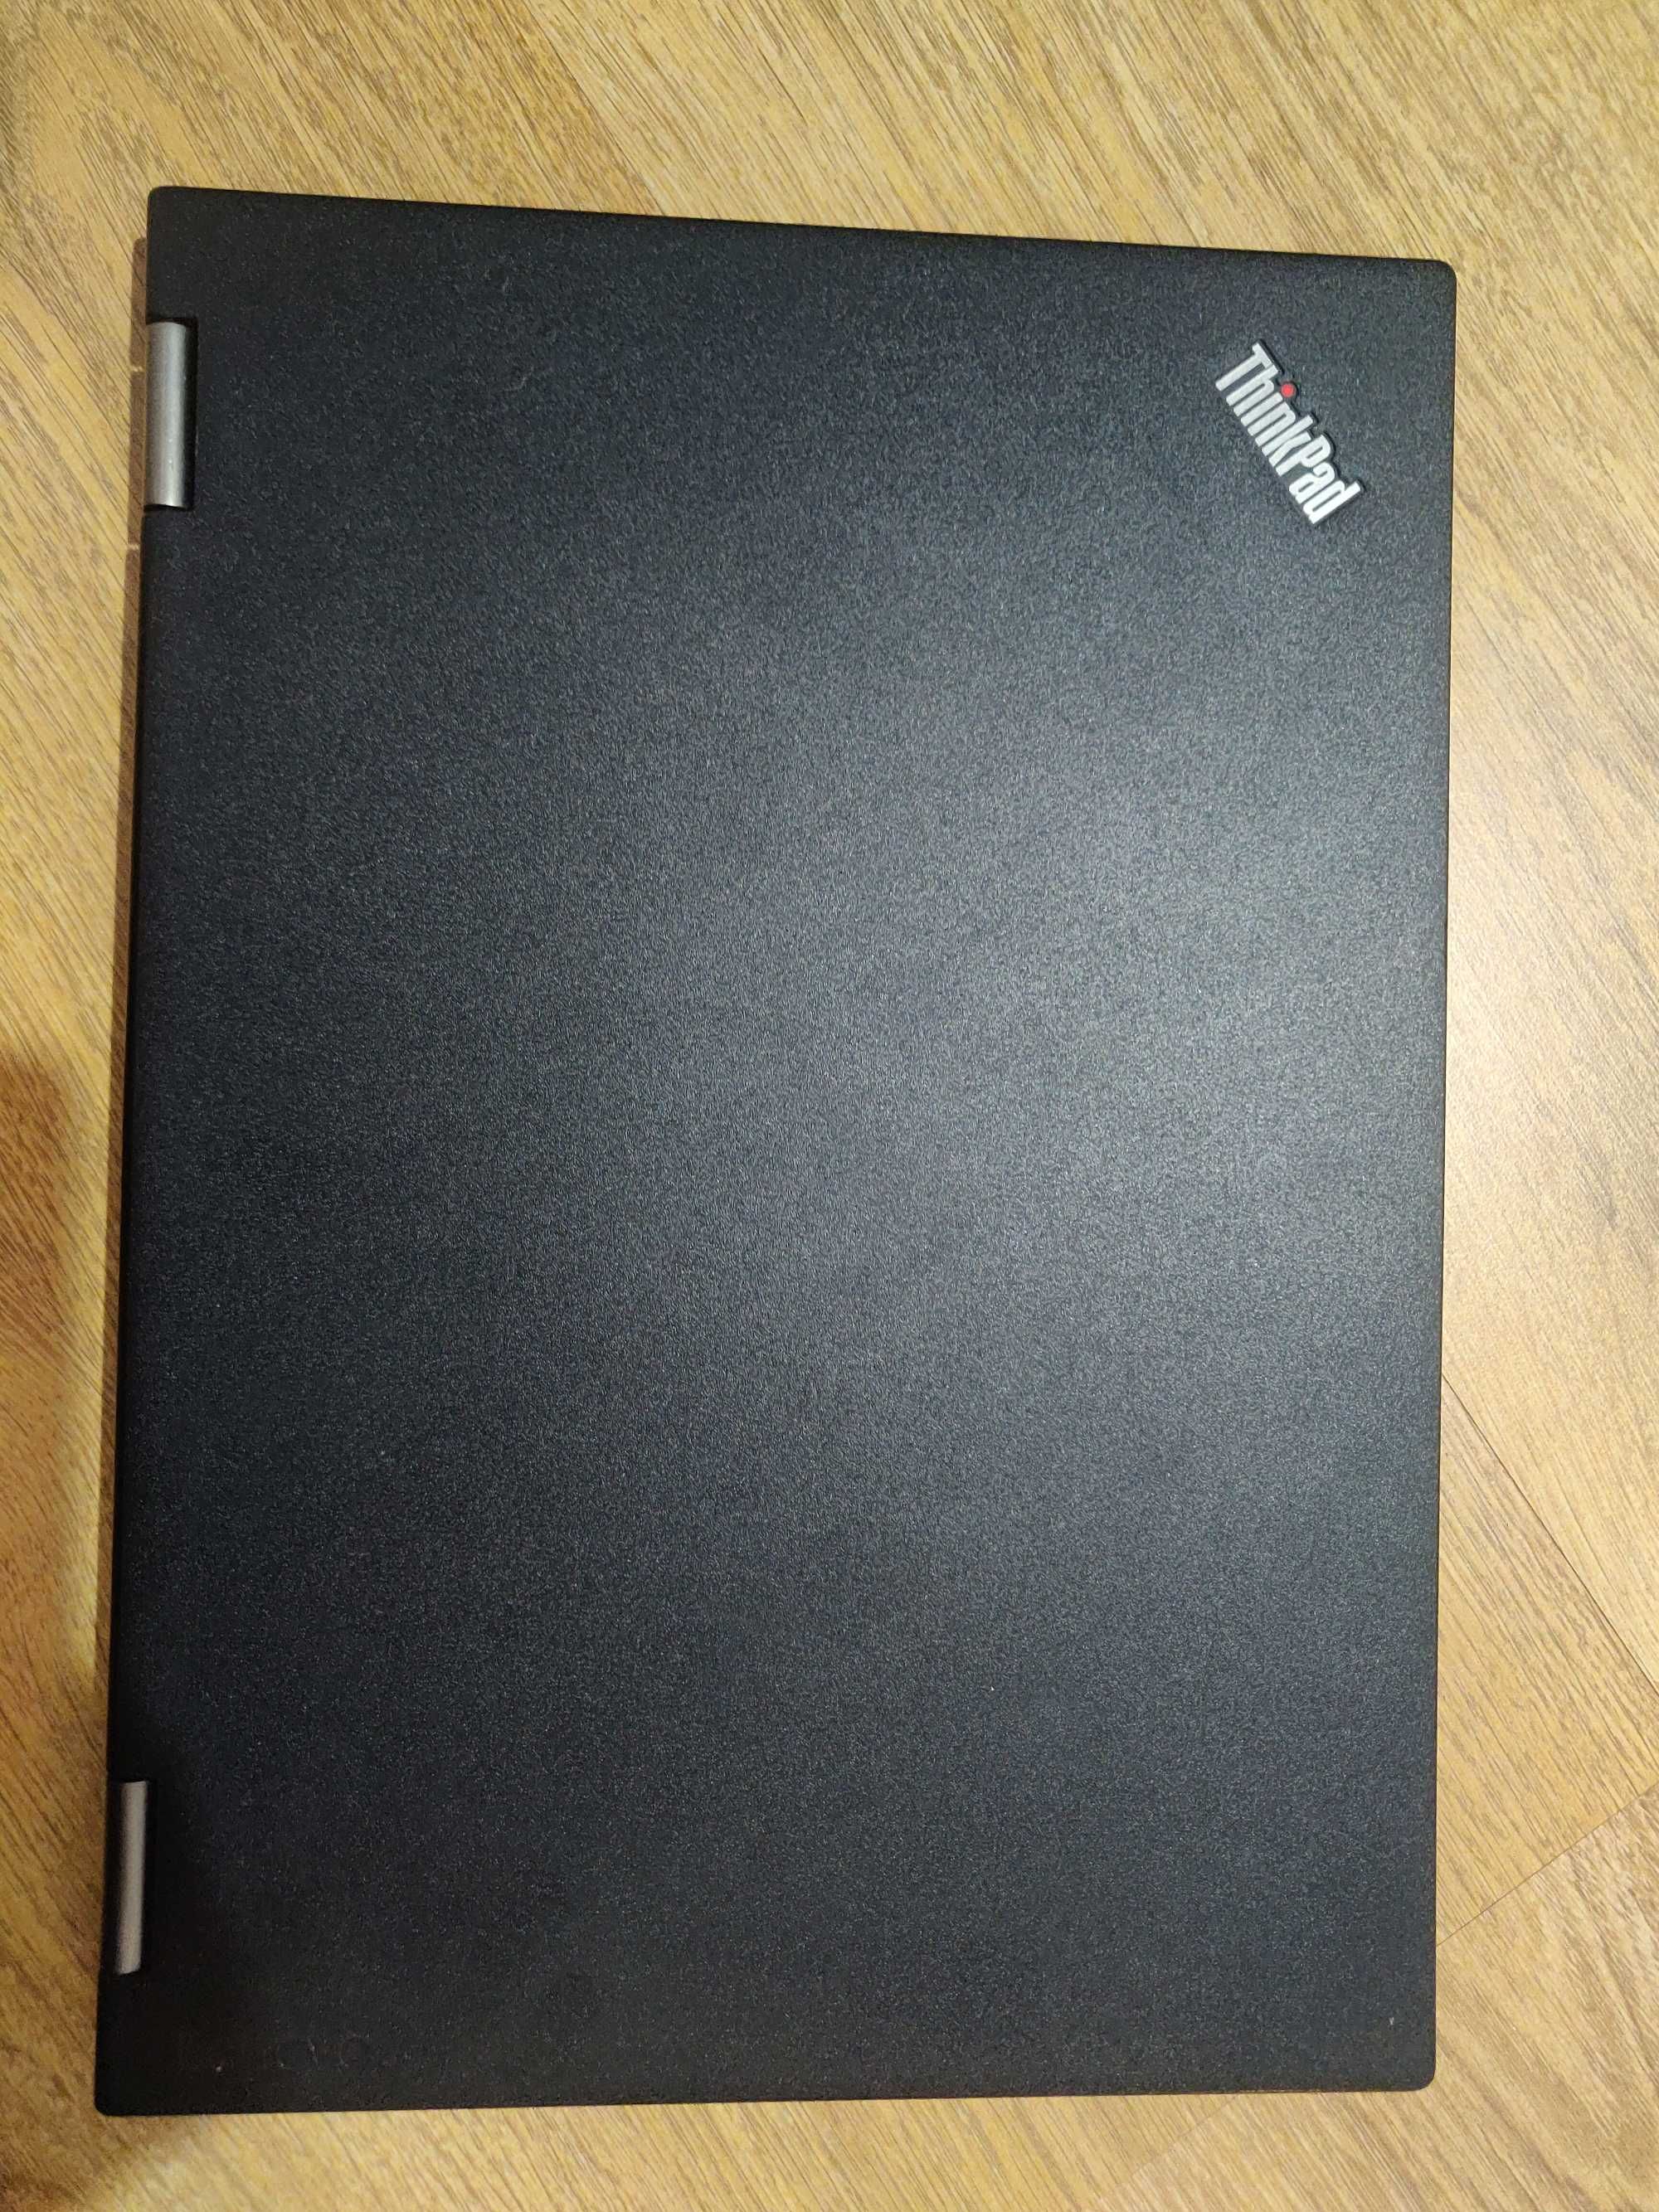 Laptop Lenovo Thinkpad YOGA x370 i5 gen7